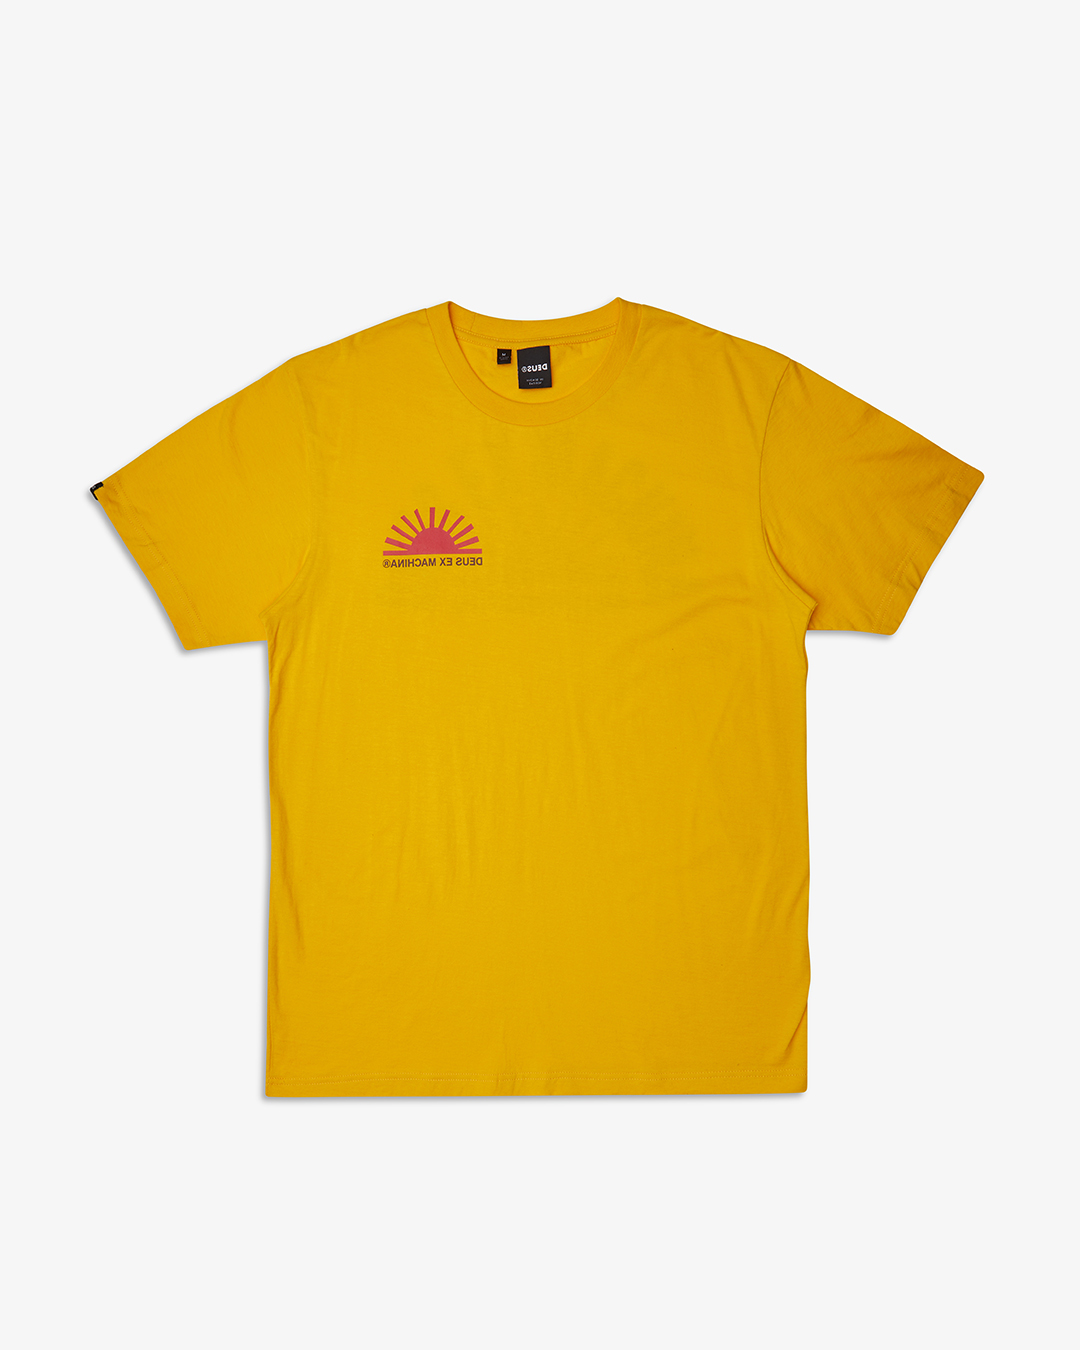 Deus ex machina tshirt - Sunflare tee spectra - jaune